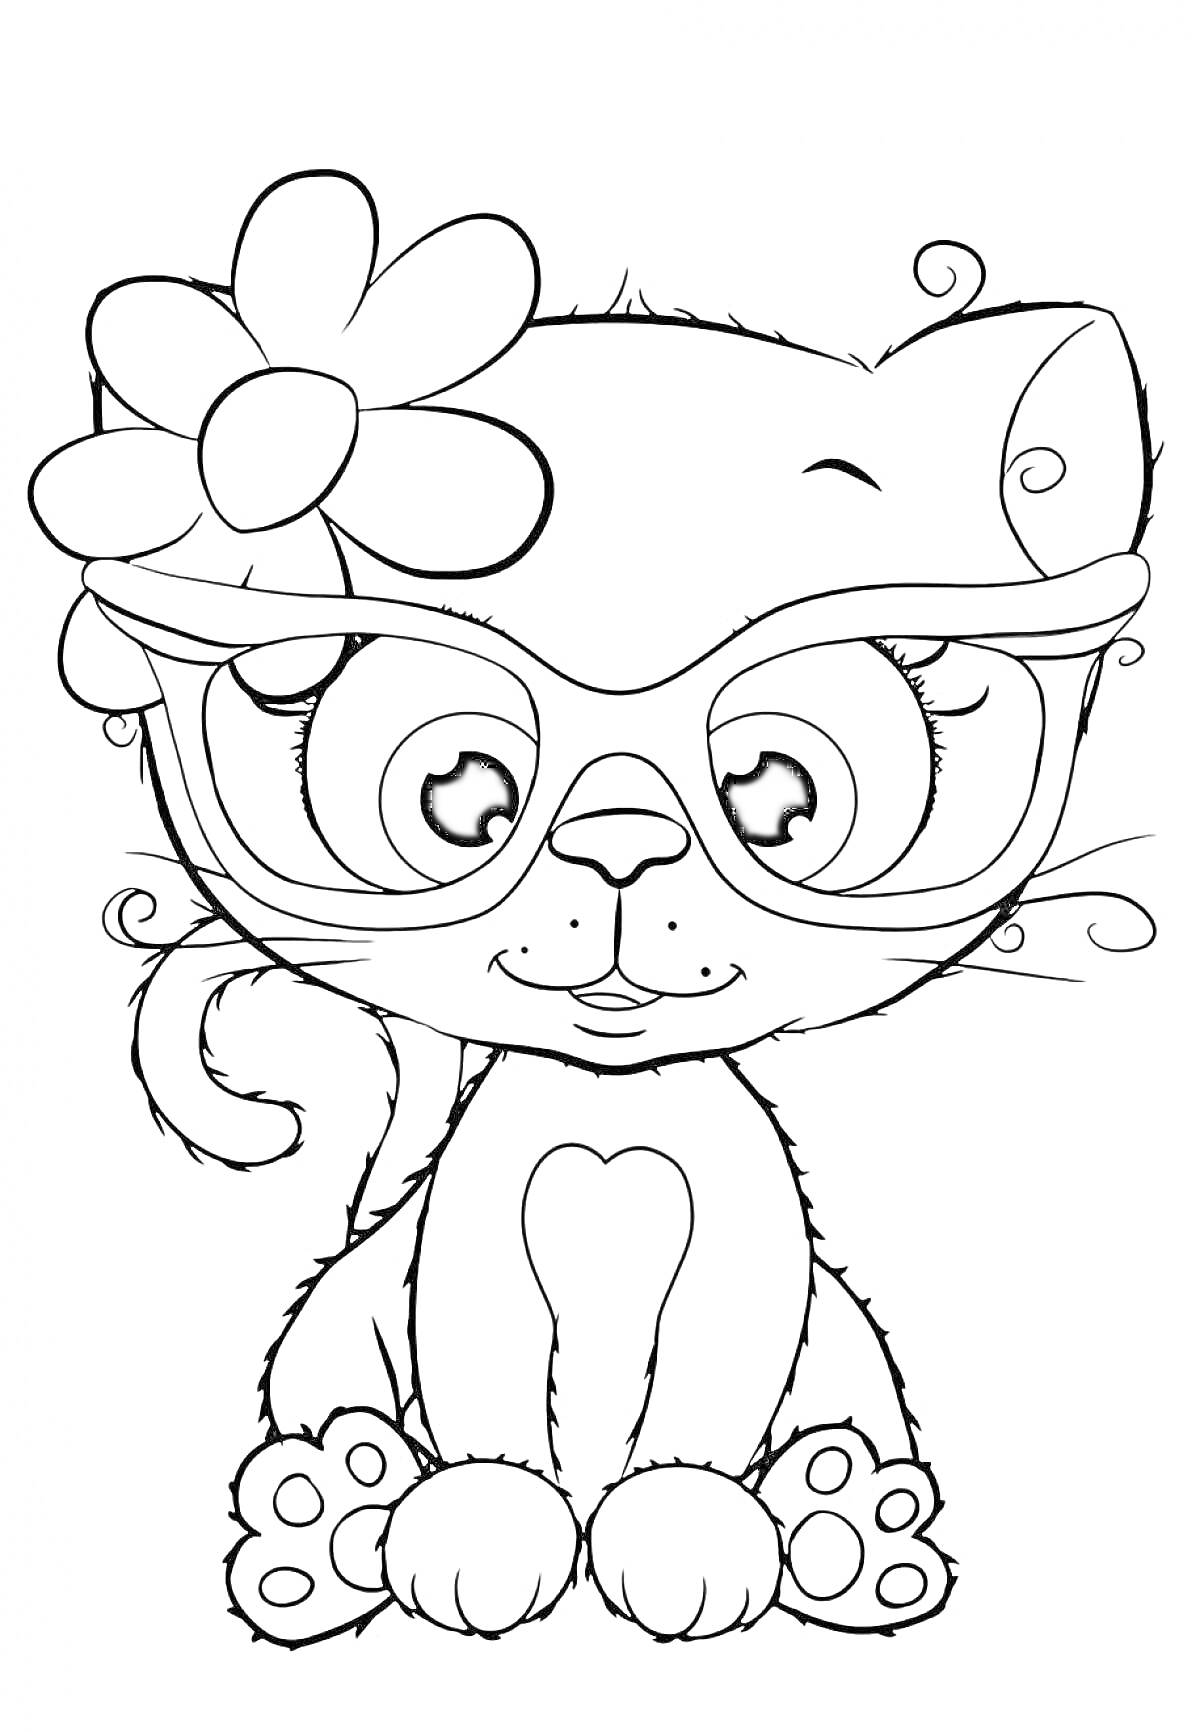 Раскраска Котик с очками и цветком на голове